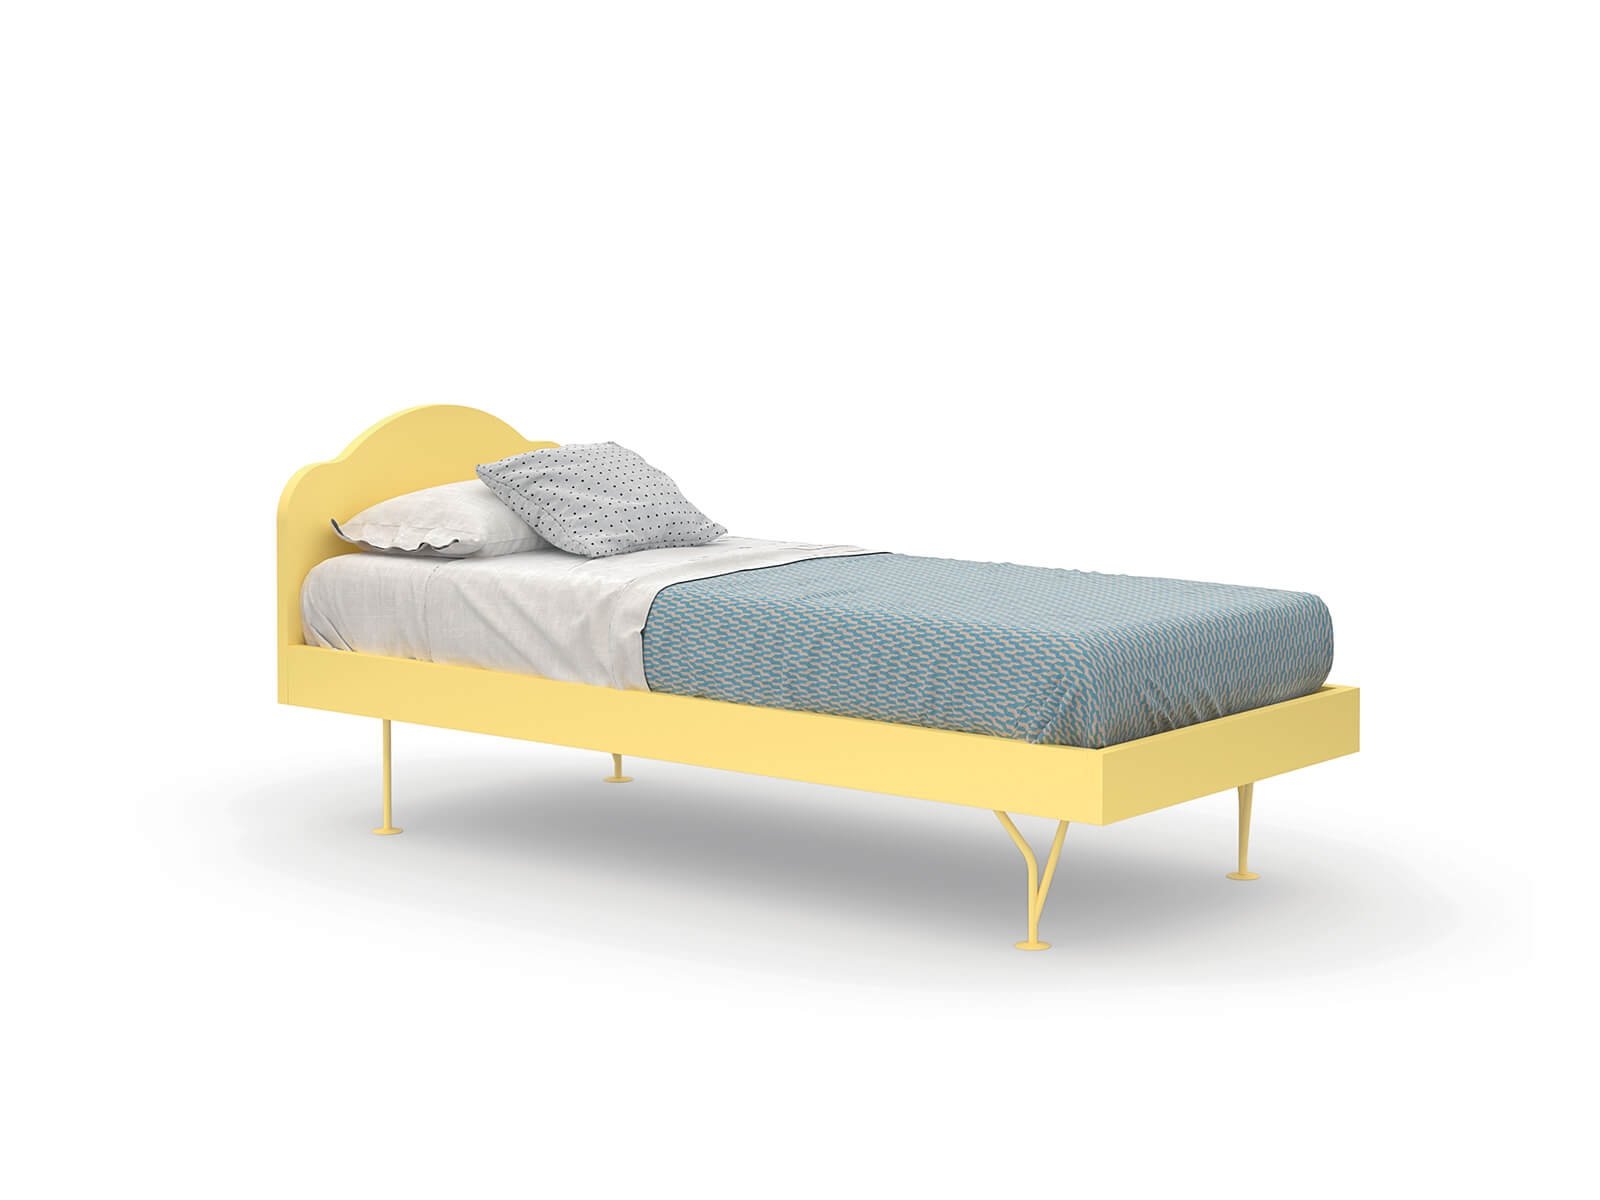 Mino single bed